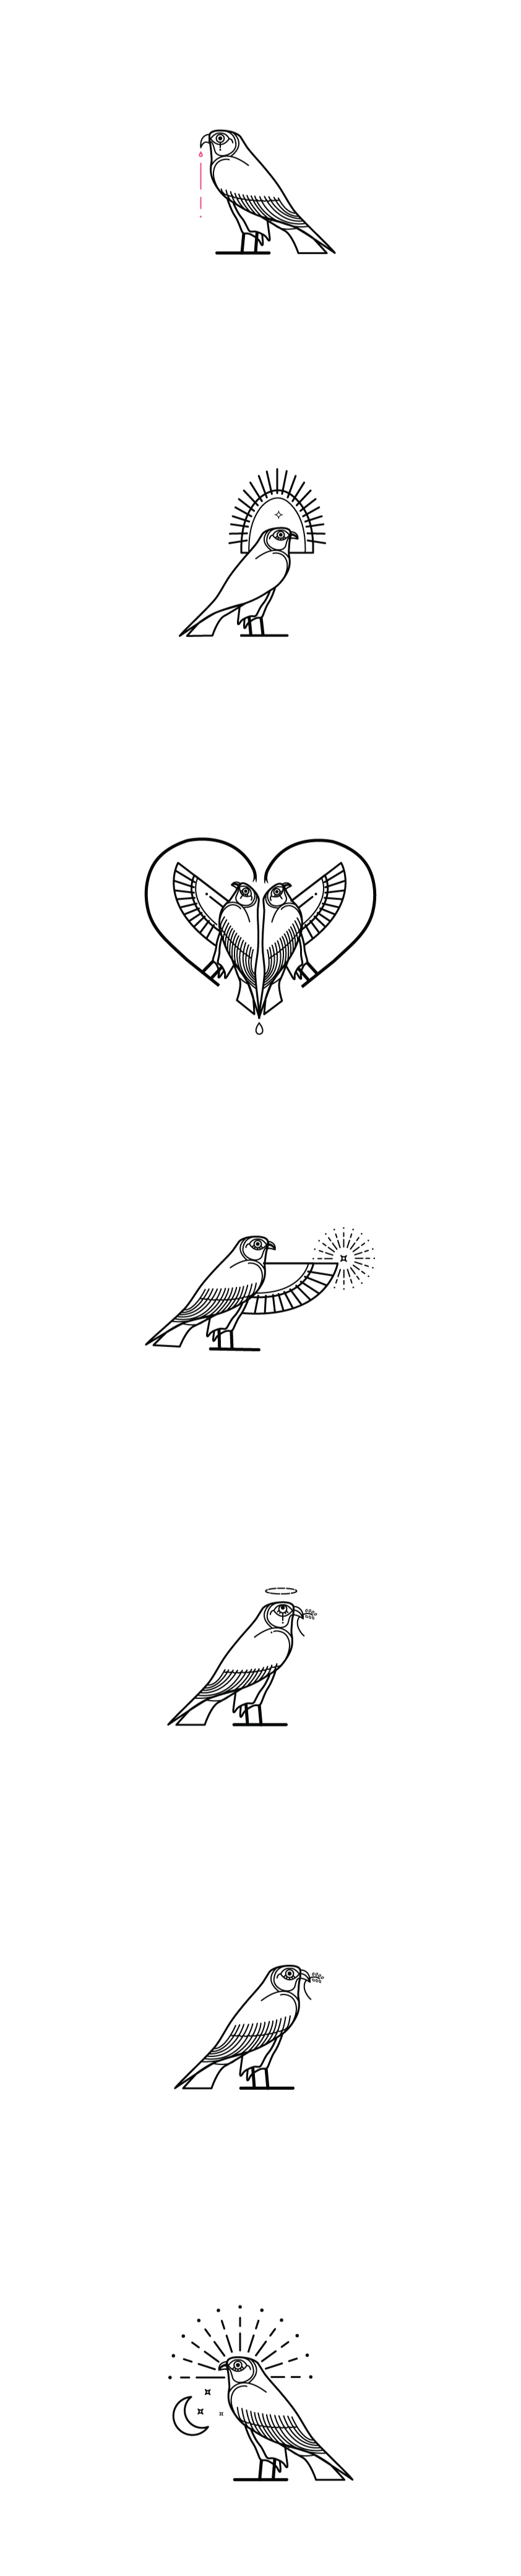 bird Icon black and white minimal hieroglyph inspired